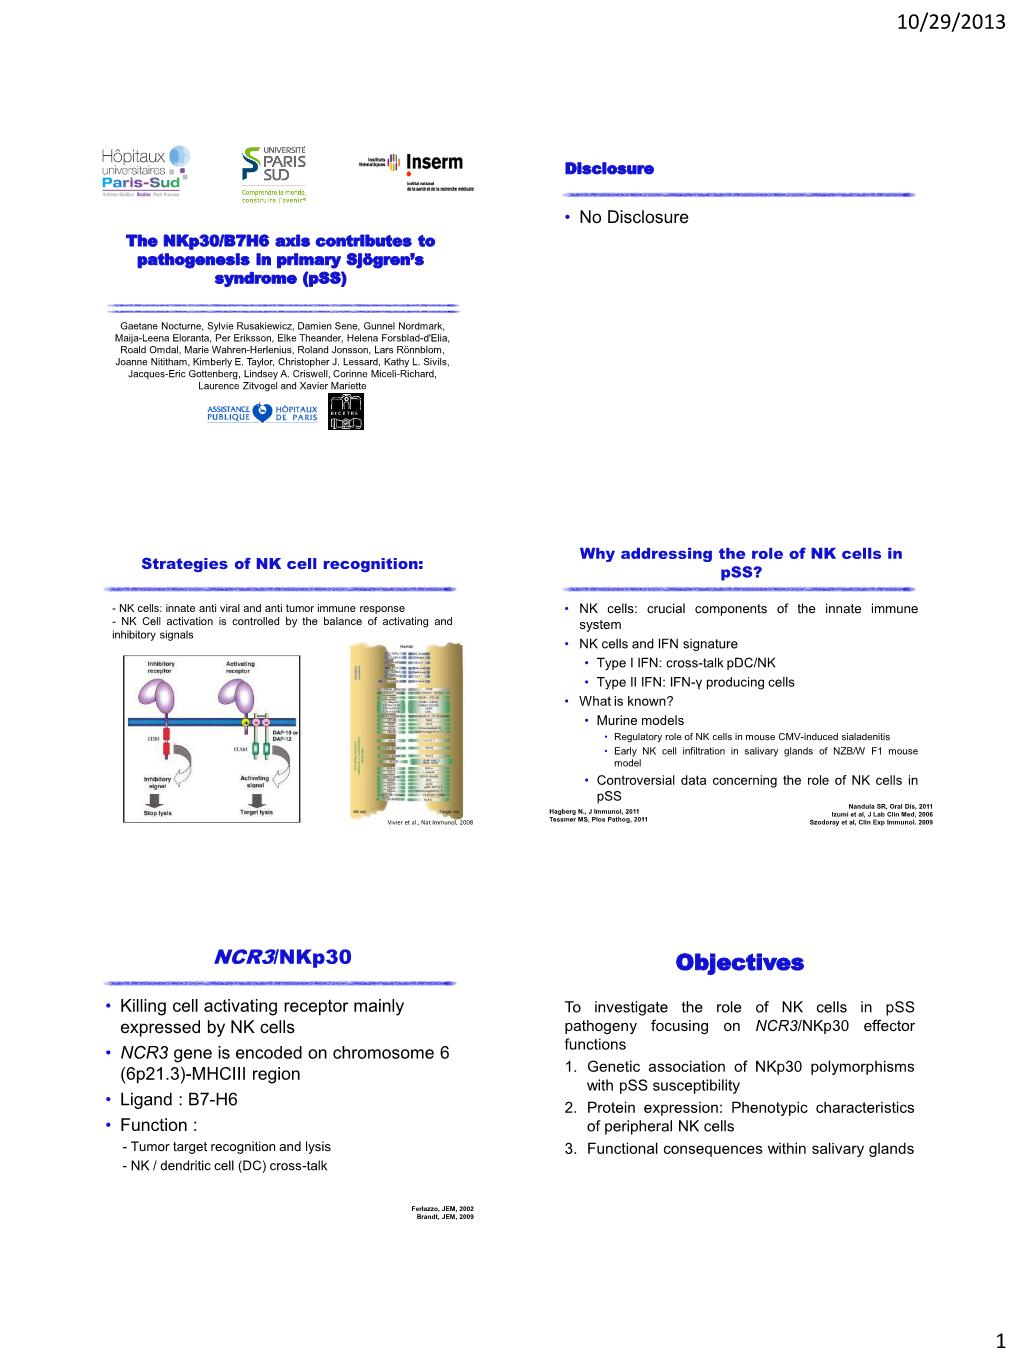 Implication of NCR3/Nkp30 in the Pathogenesis of Primary Sjögren's